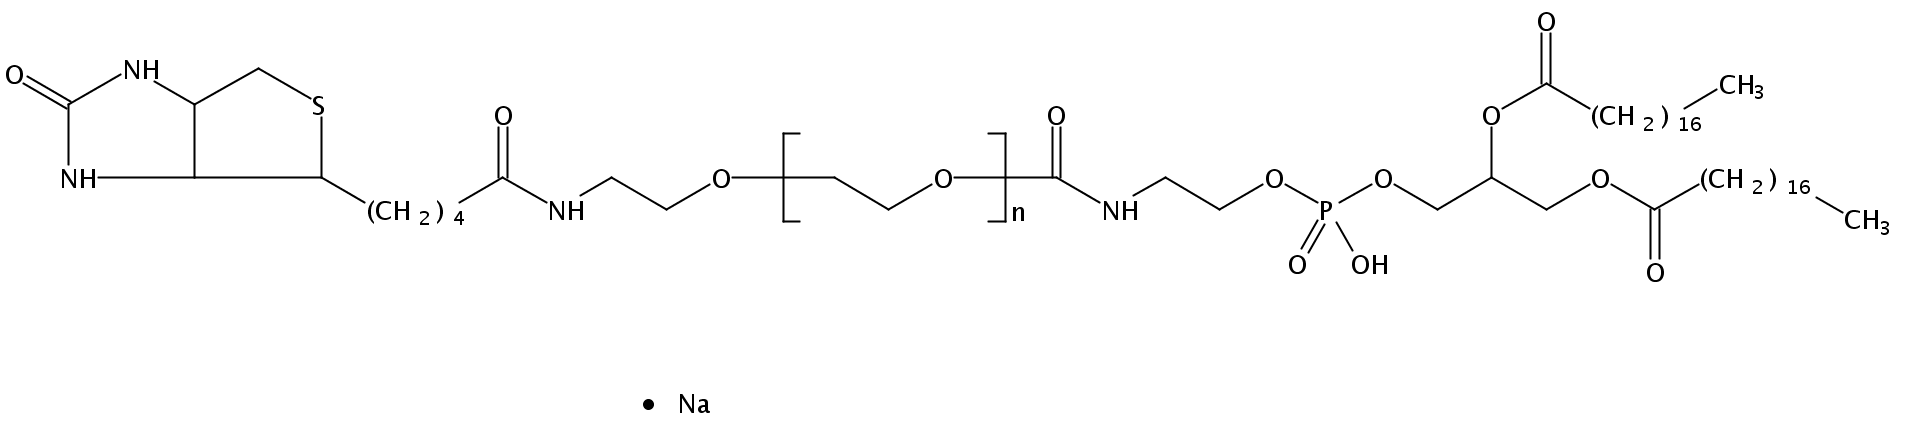 1,2-distearoyl-sn-glycero-3-phosphoethanolamine-N-[biotinyl(polyethylene glycol)-2000] (ammonium salt)